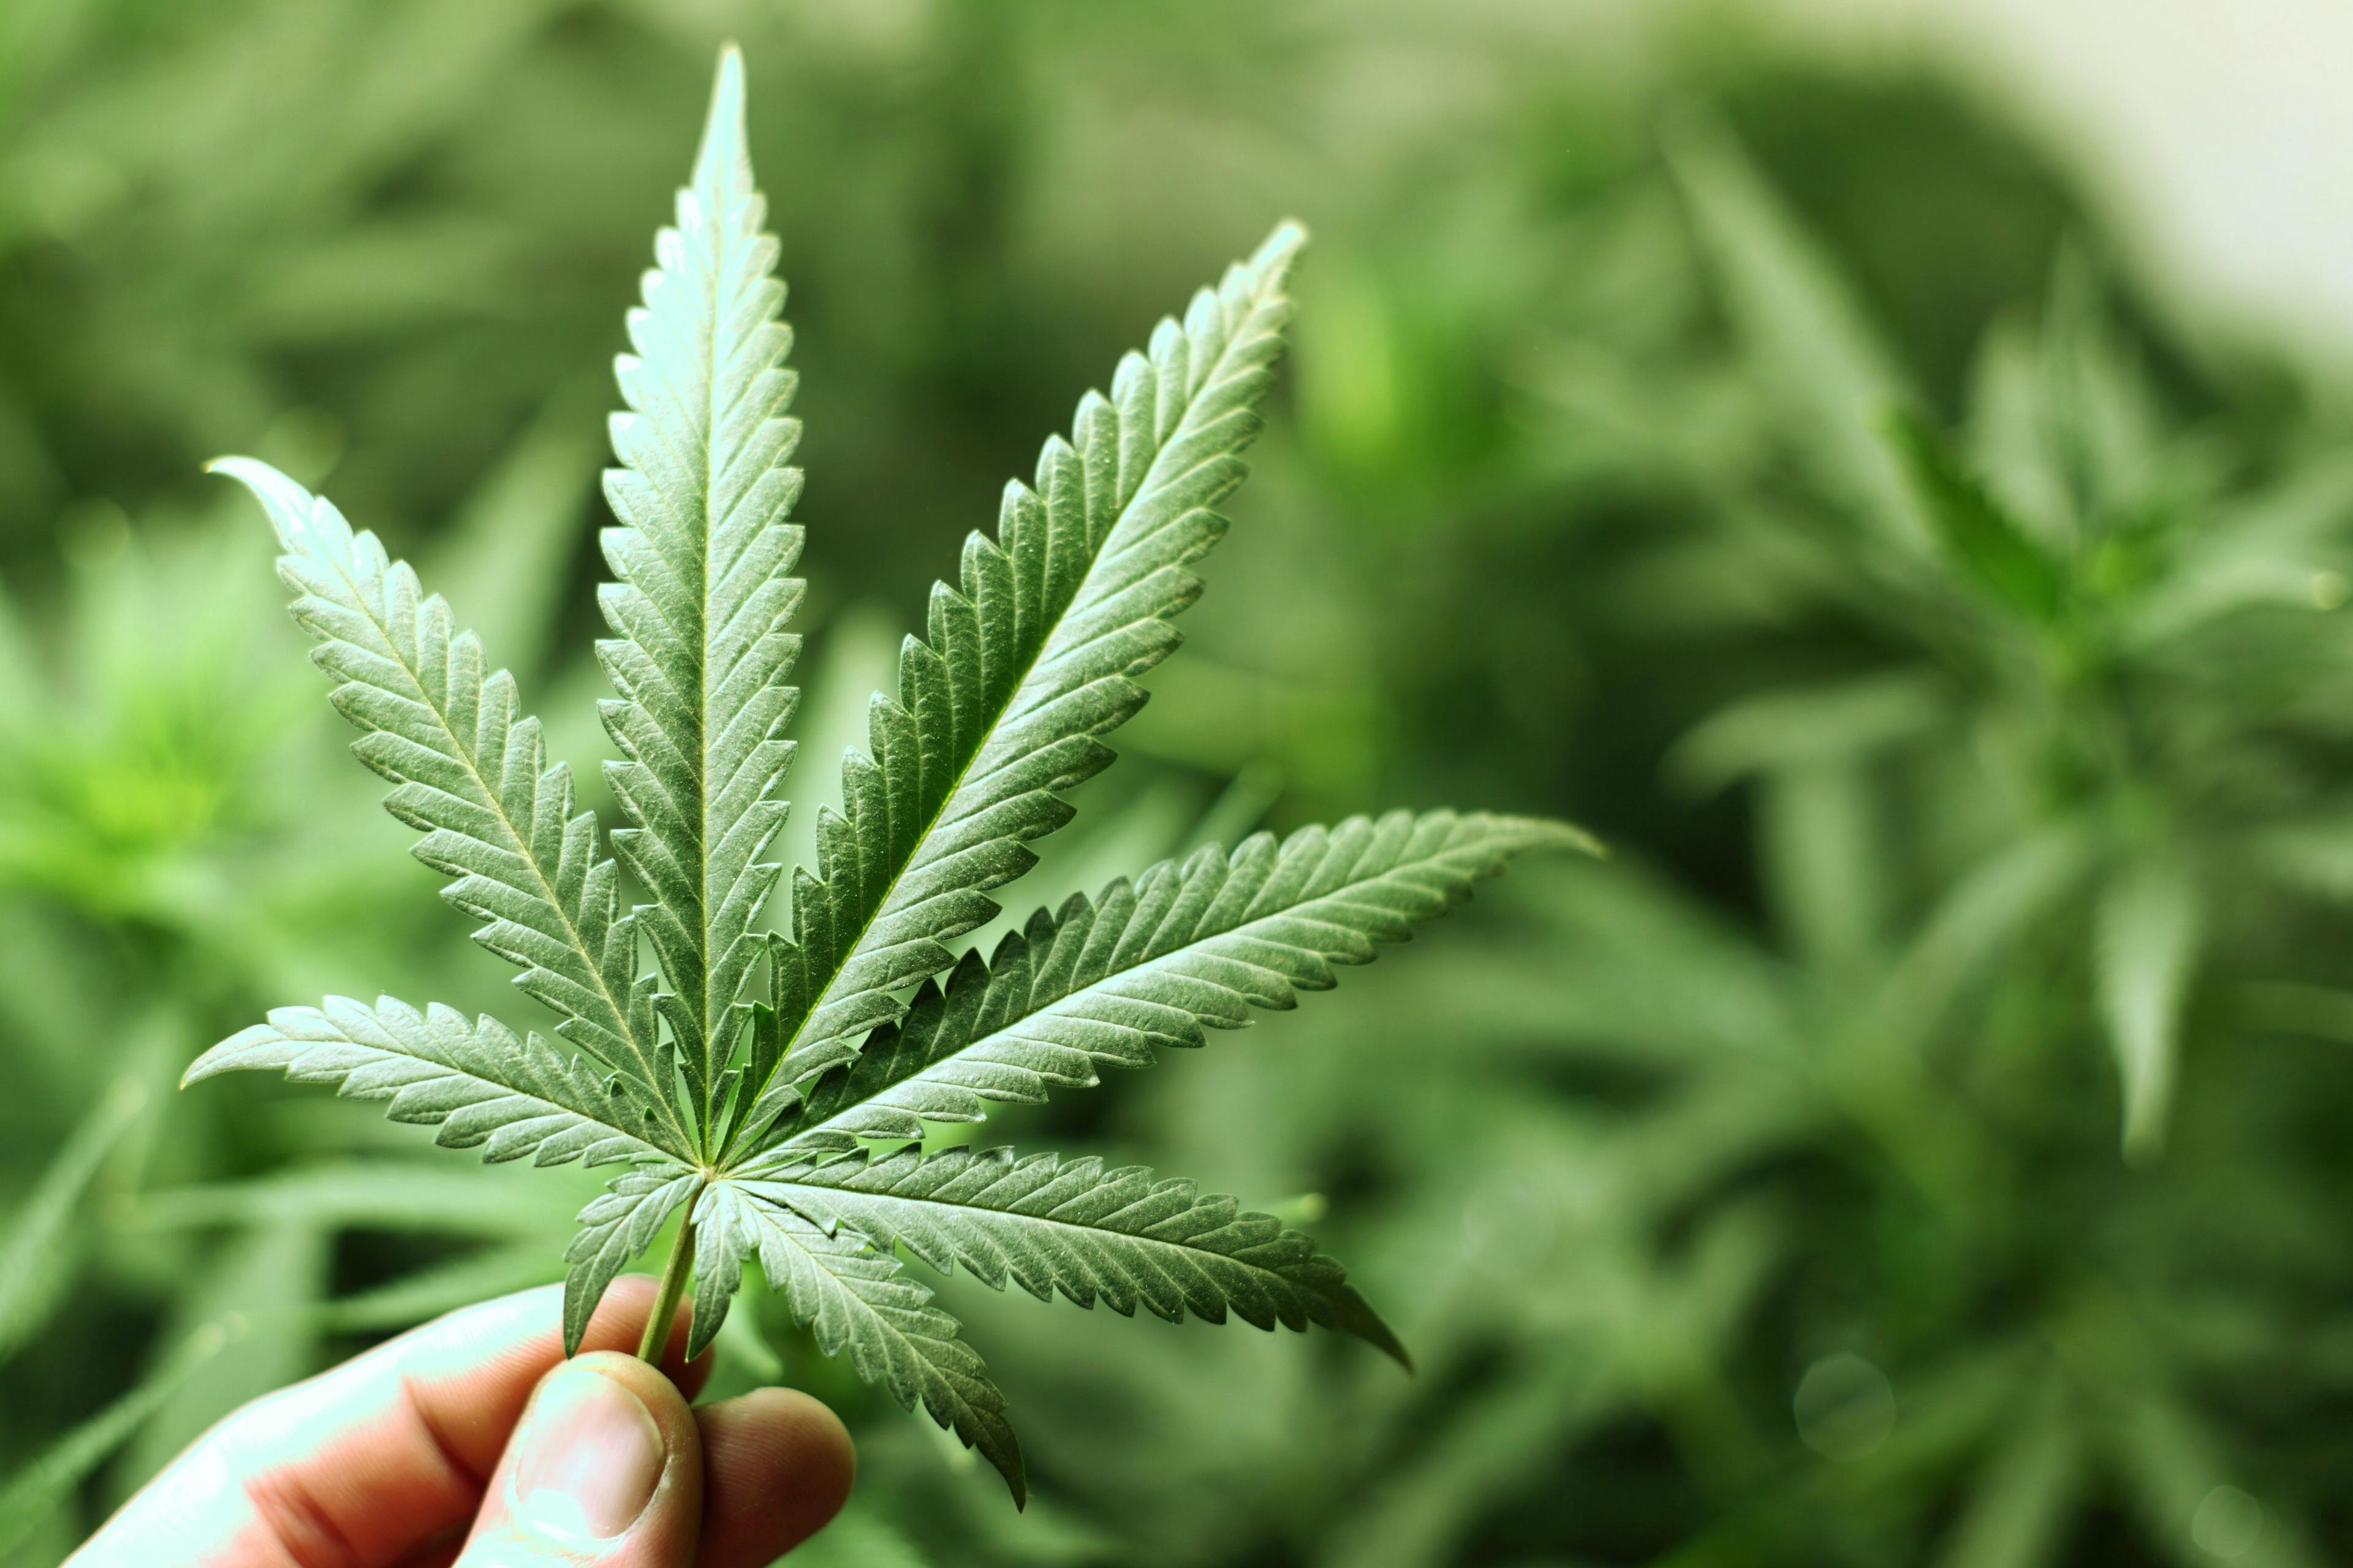 Cannabis Leaf | image credit: yellowj - stock.adobe.com